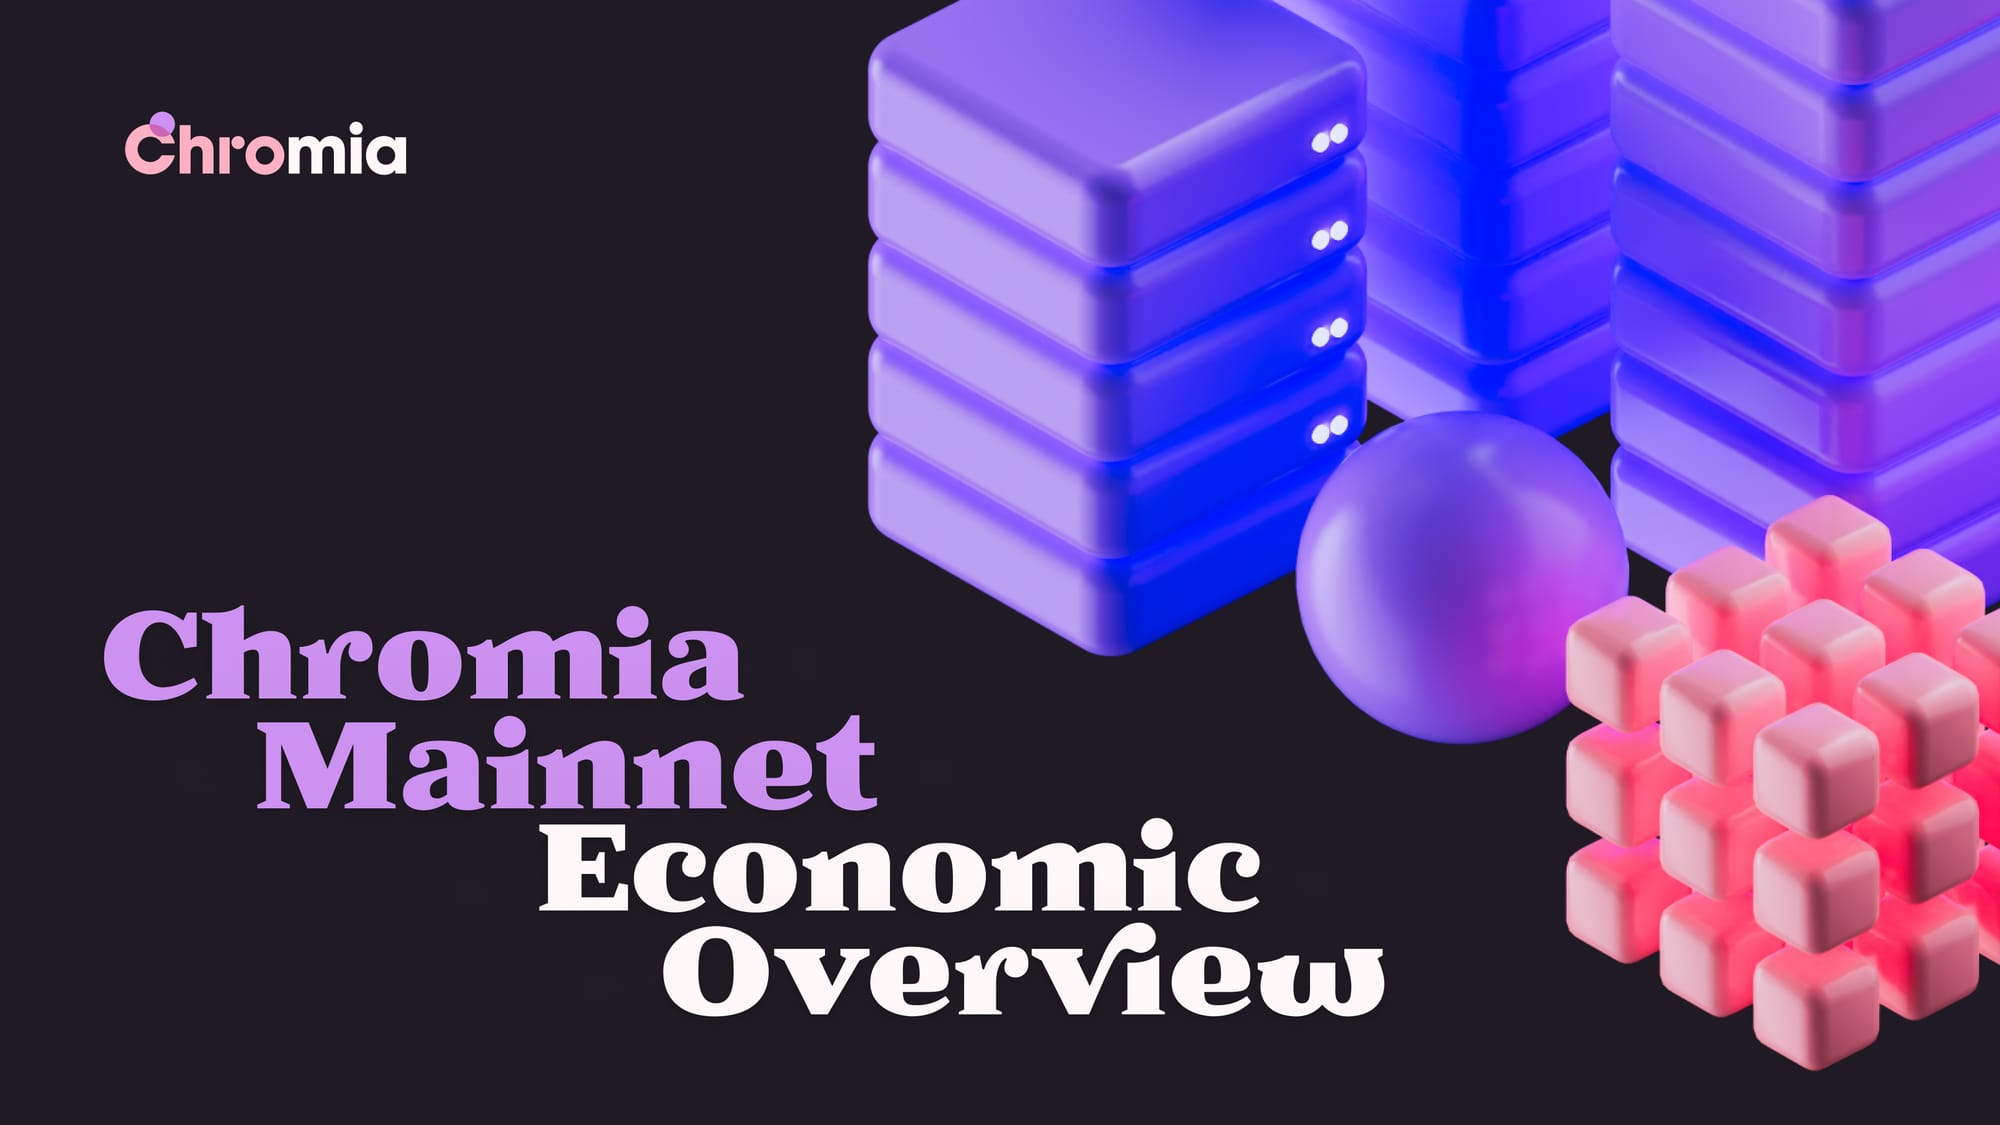 Chromia Mainnet Economic Overview